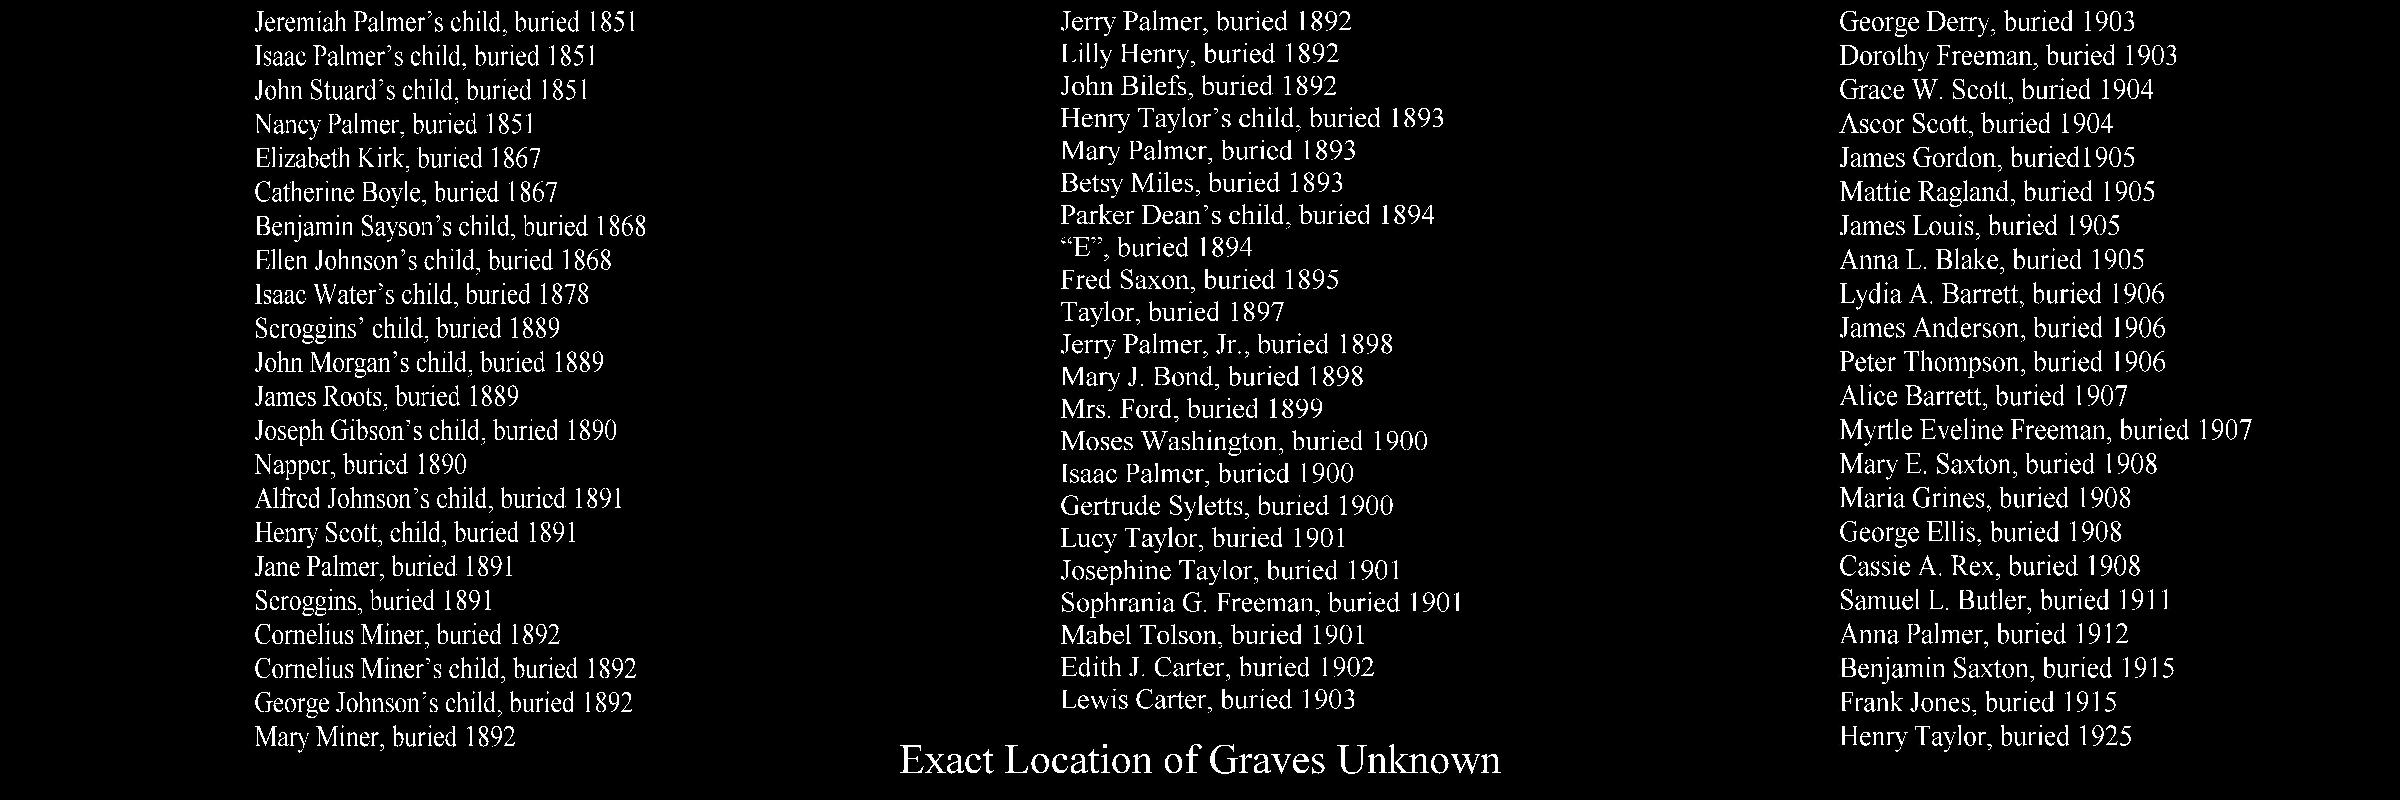 Grave Marker w Dates